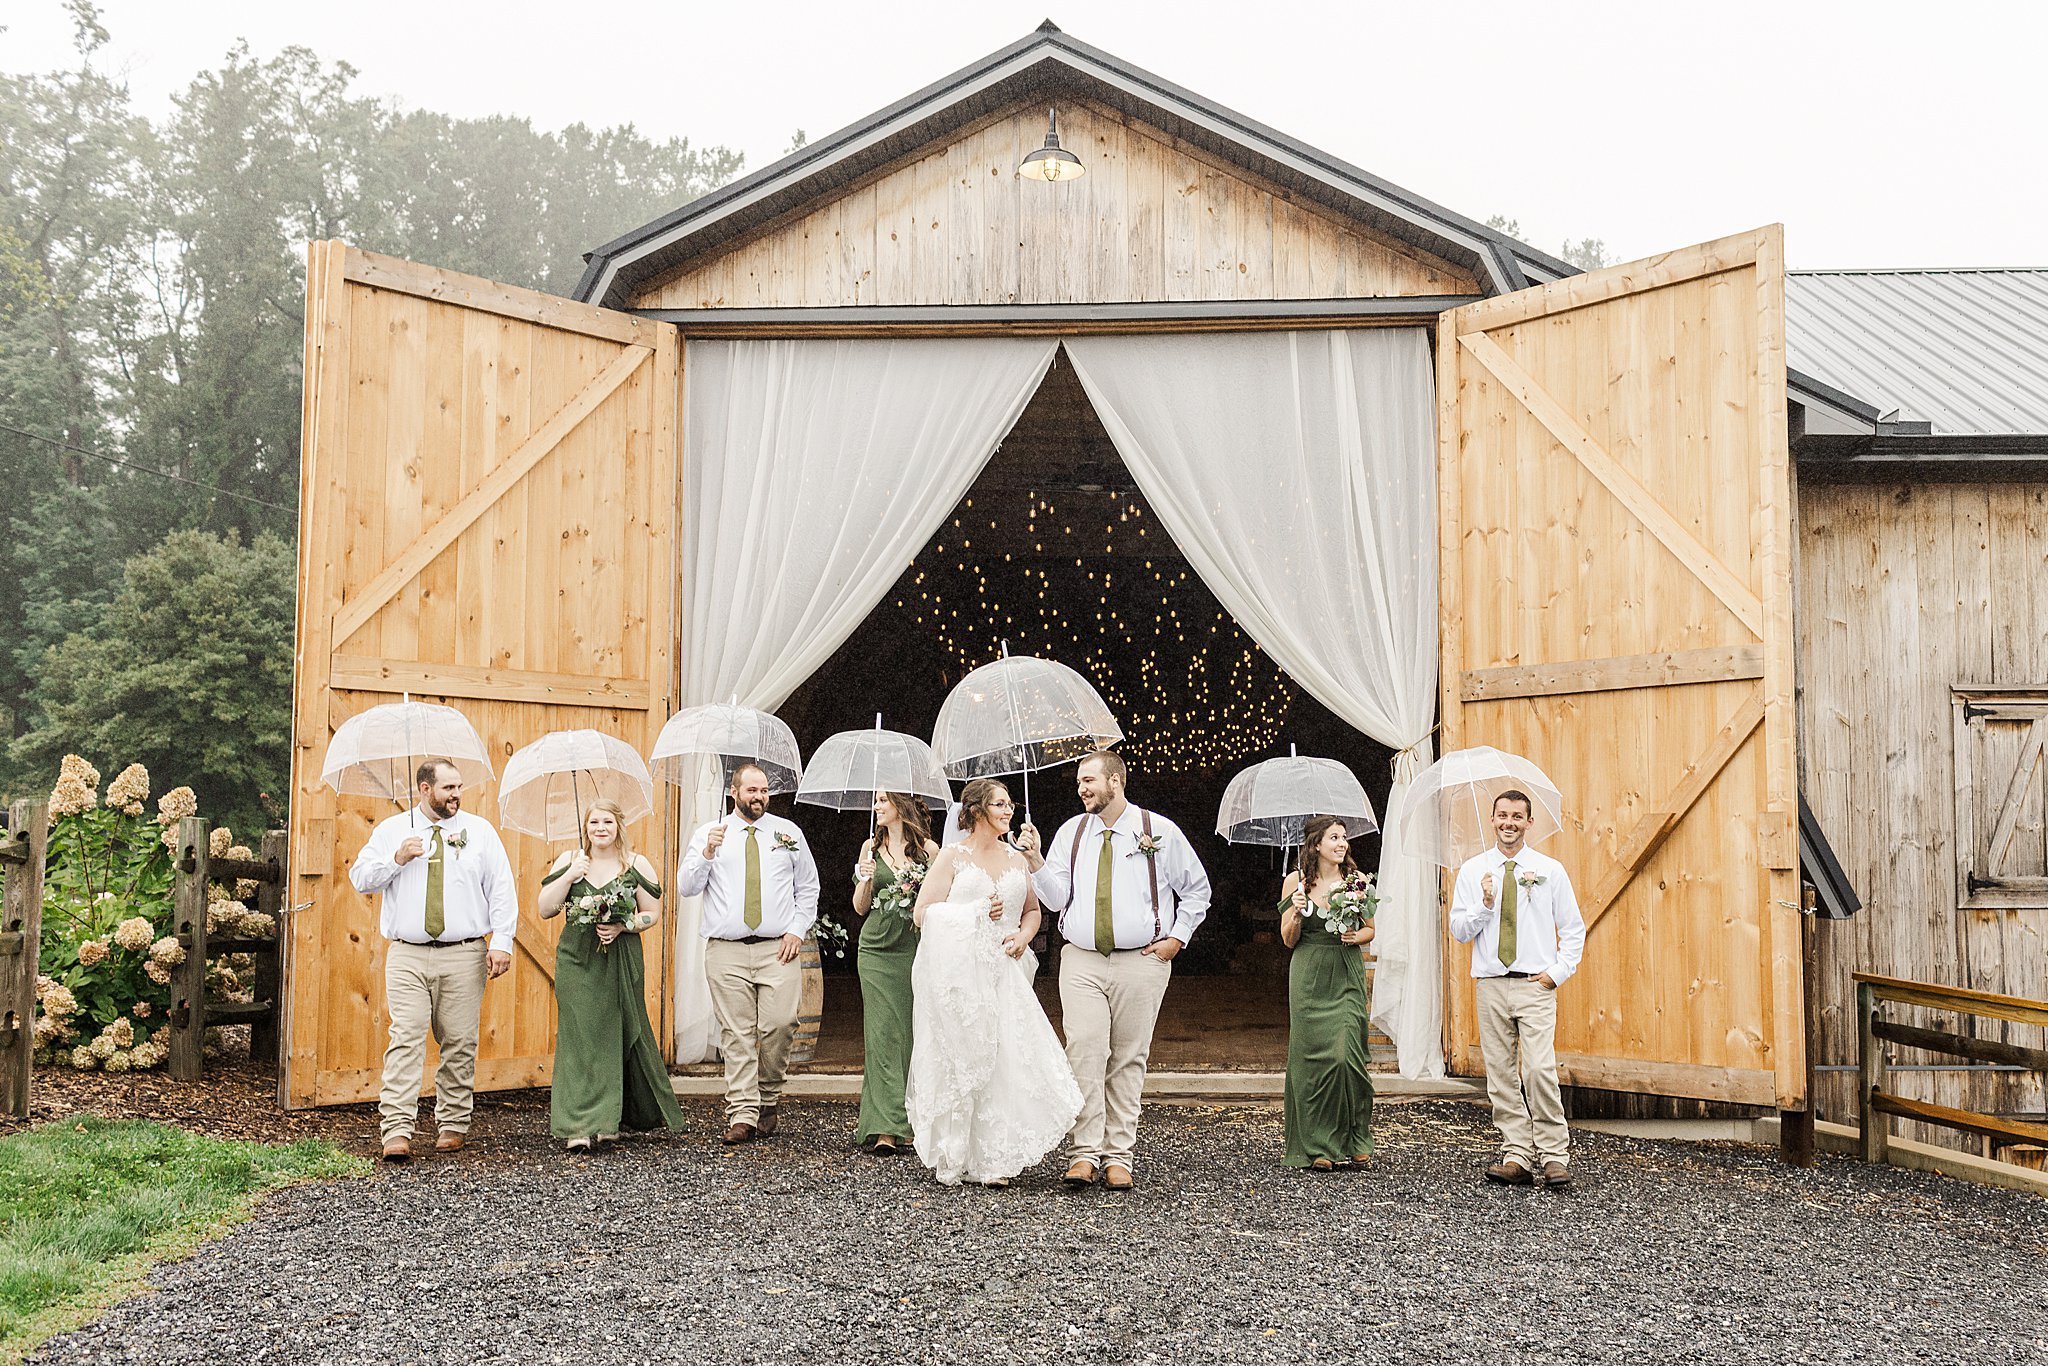 Pequea PA Barn Fall Wedding Rainy Day Photography_6148.jpg